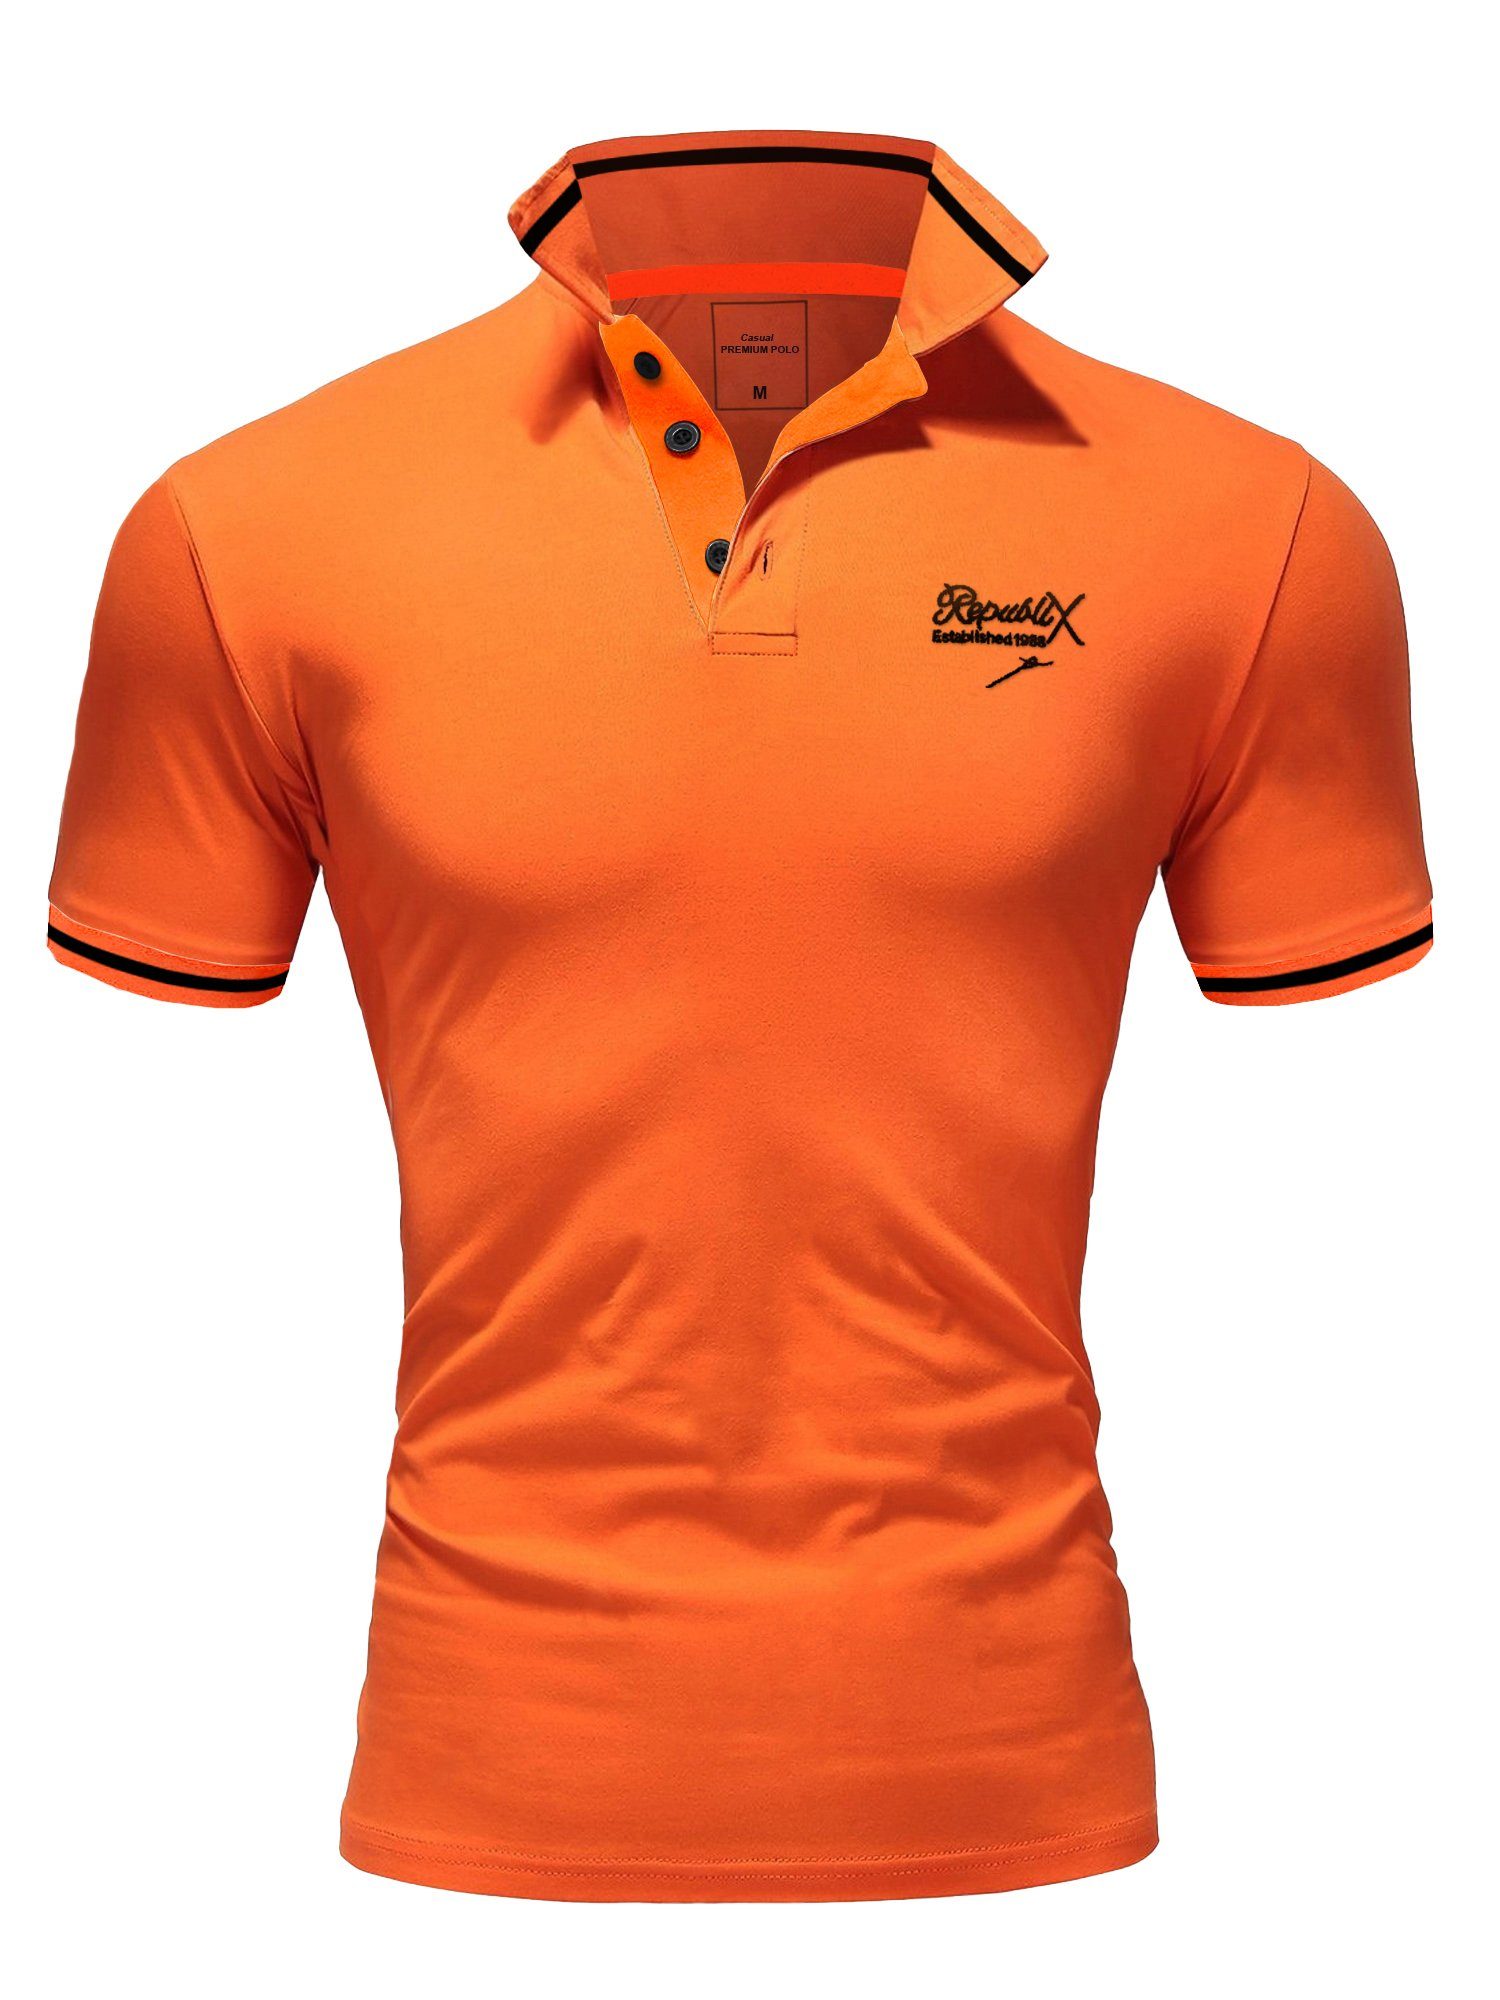 REPUBLIX Poloshirt GABRIEL Herren Basic Kurzarm Kontrast Polo Hemd Orange/Schwarz